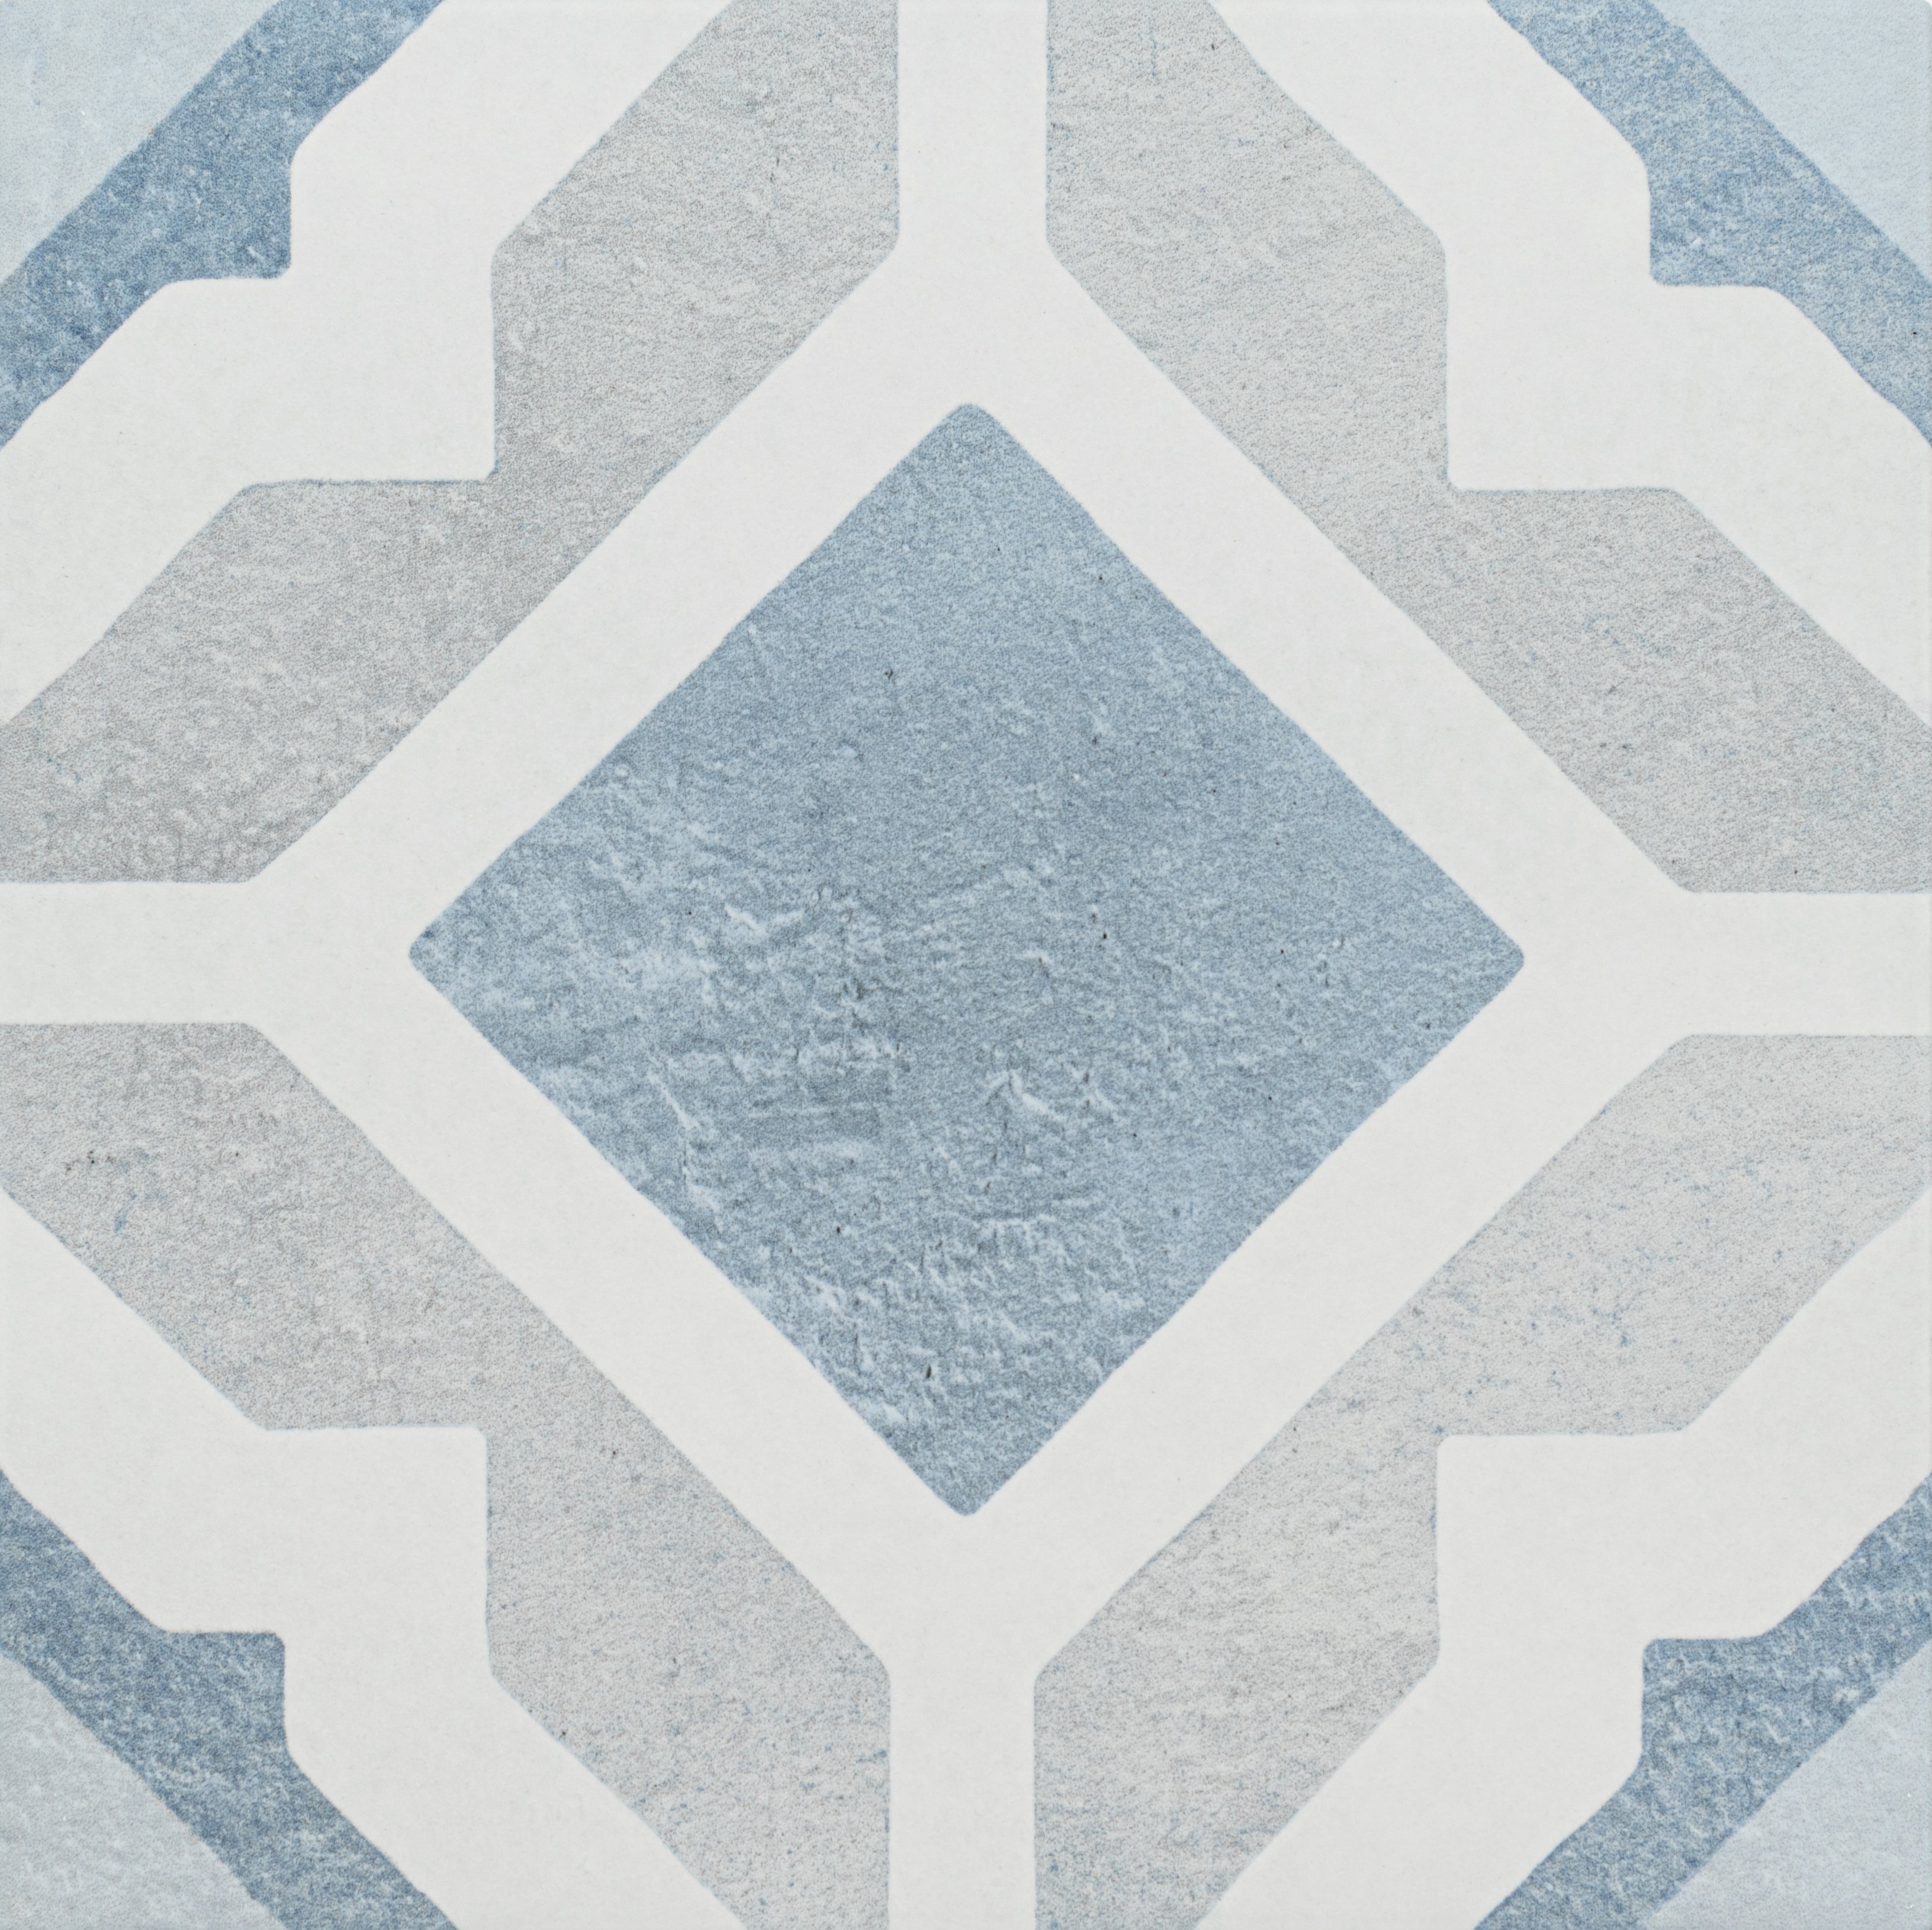 Marine 8x8 Blue and Gray Elba Decorative Pattern Porcelain Tile - SAMPLES